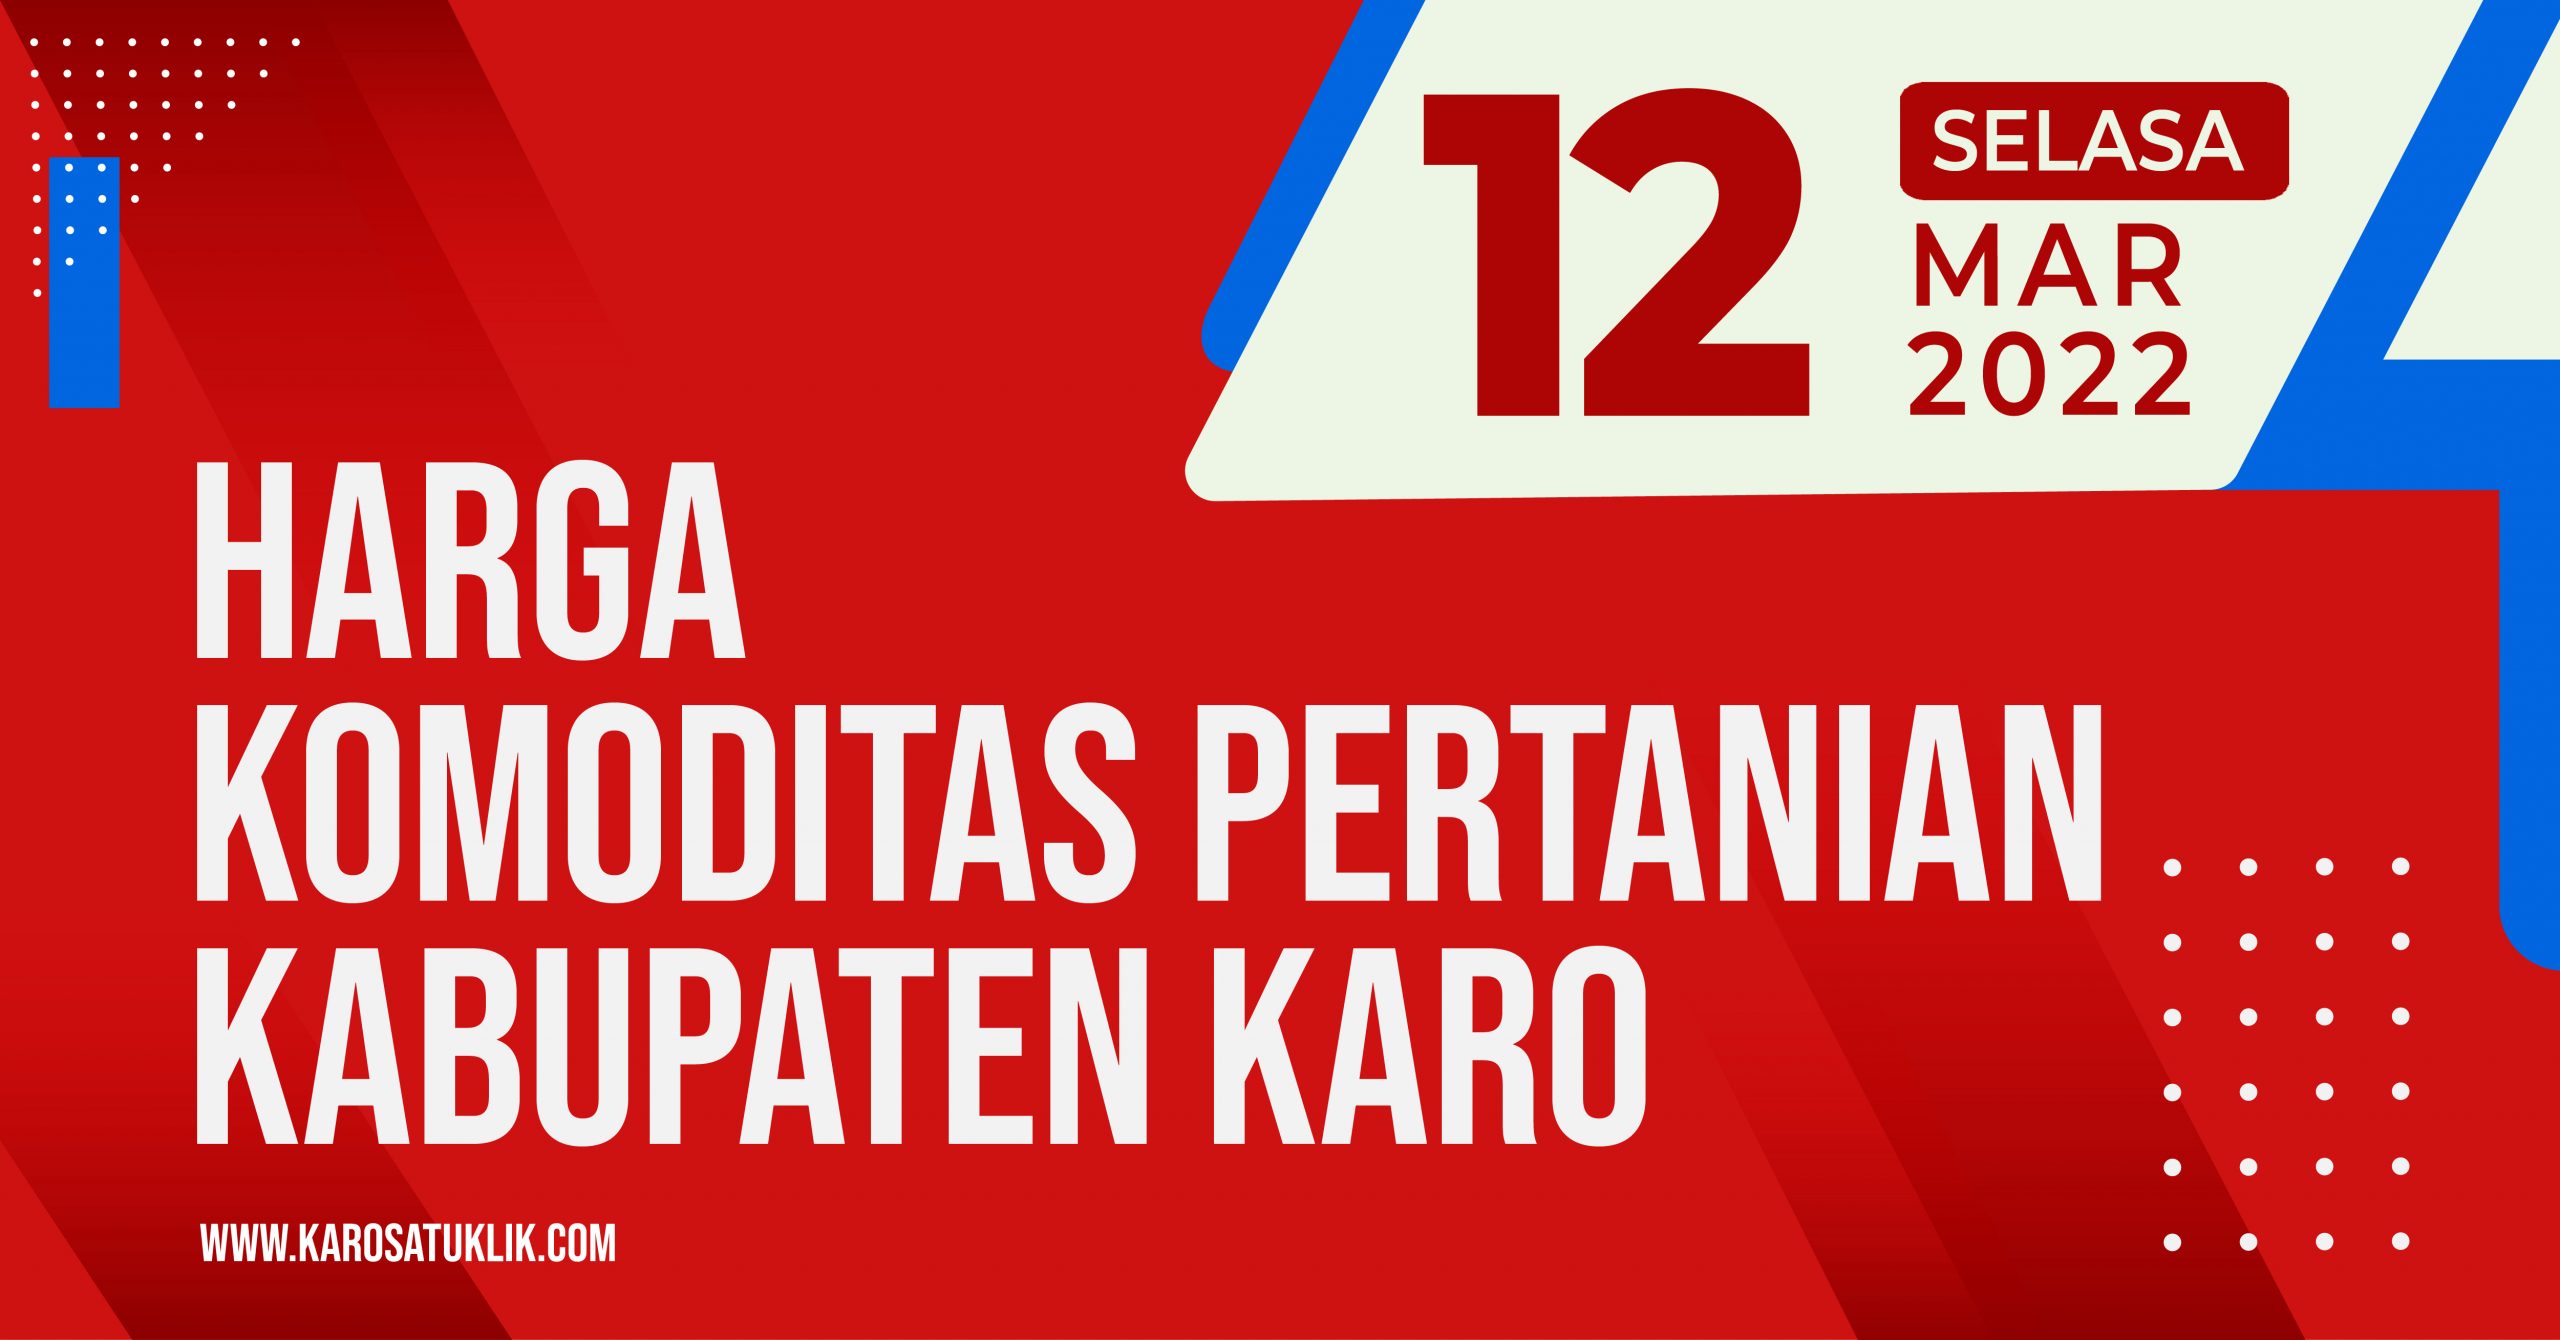 Daftar Harga Komoditas Pertanian Kabupaten Karo, Selasa 12 April 2022